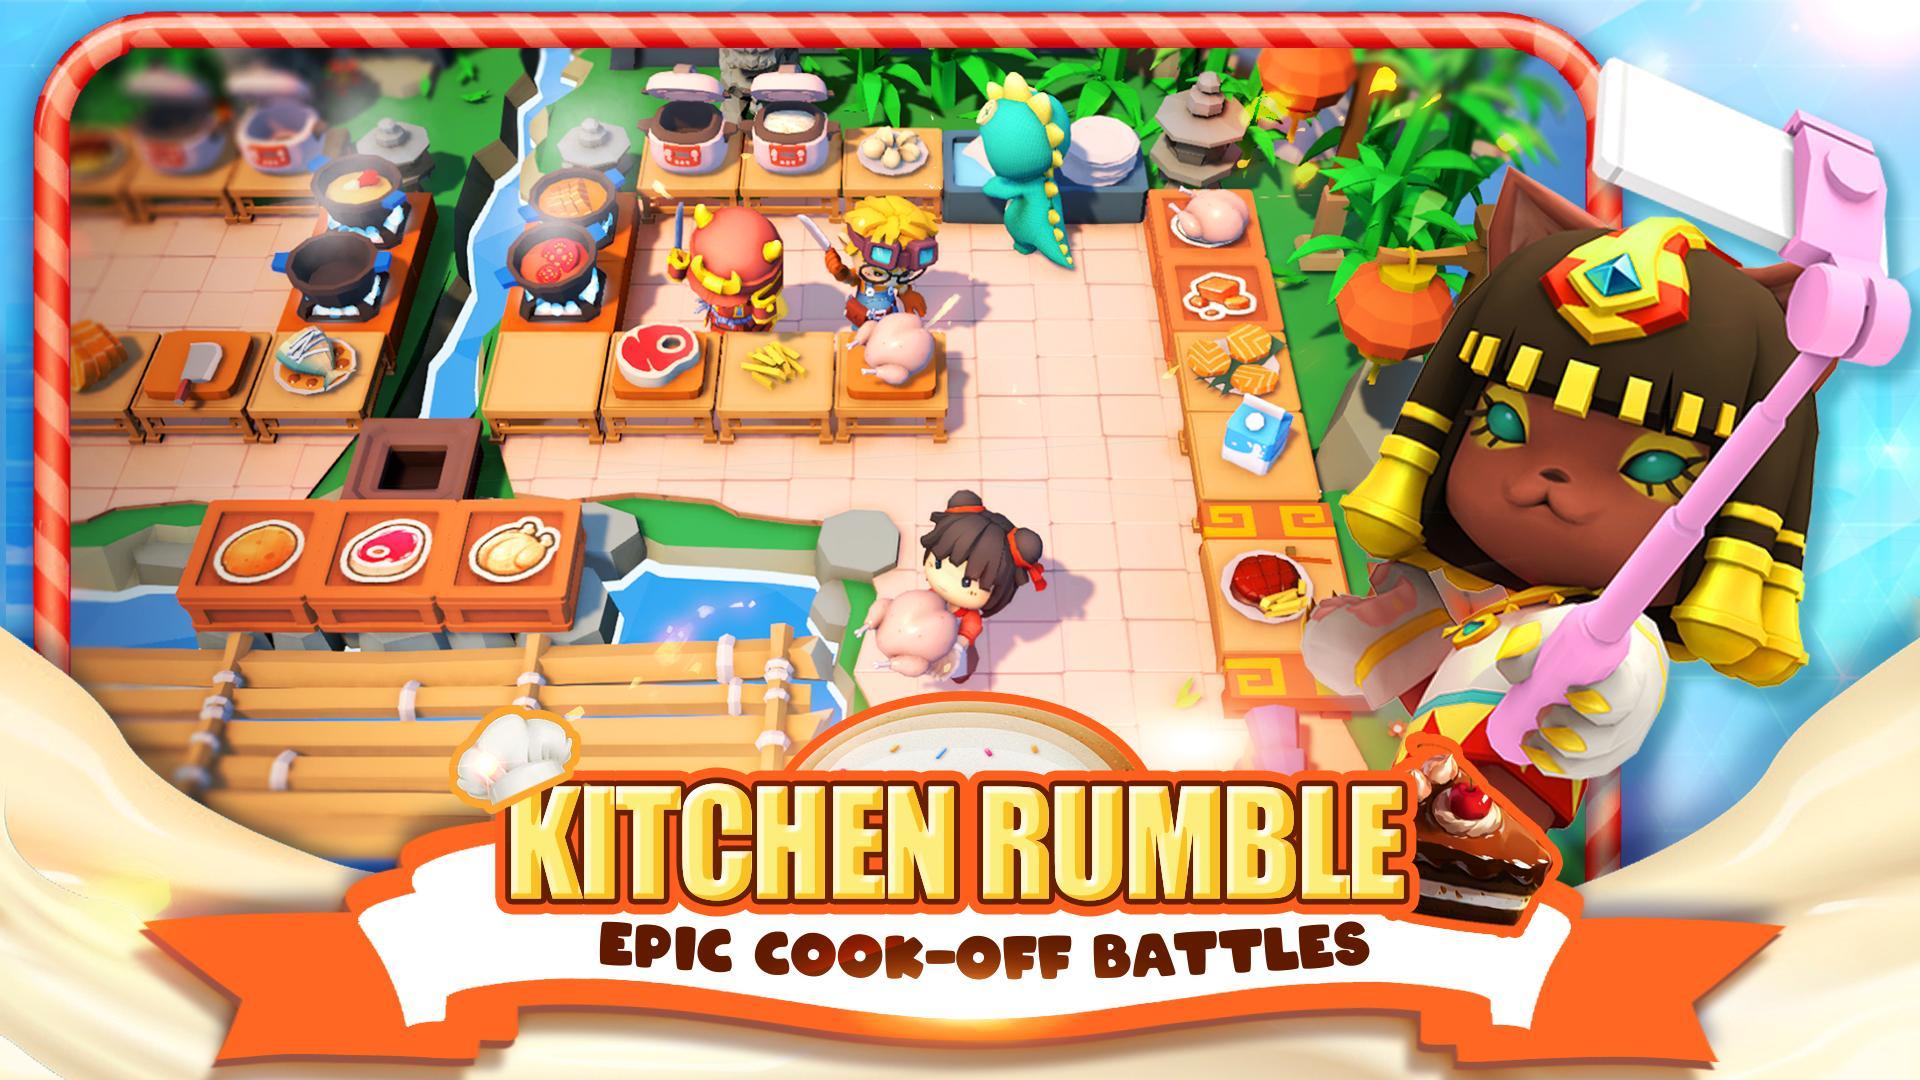 Cooking Live: Restaurant game download